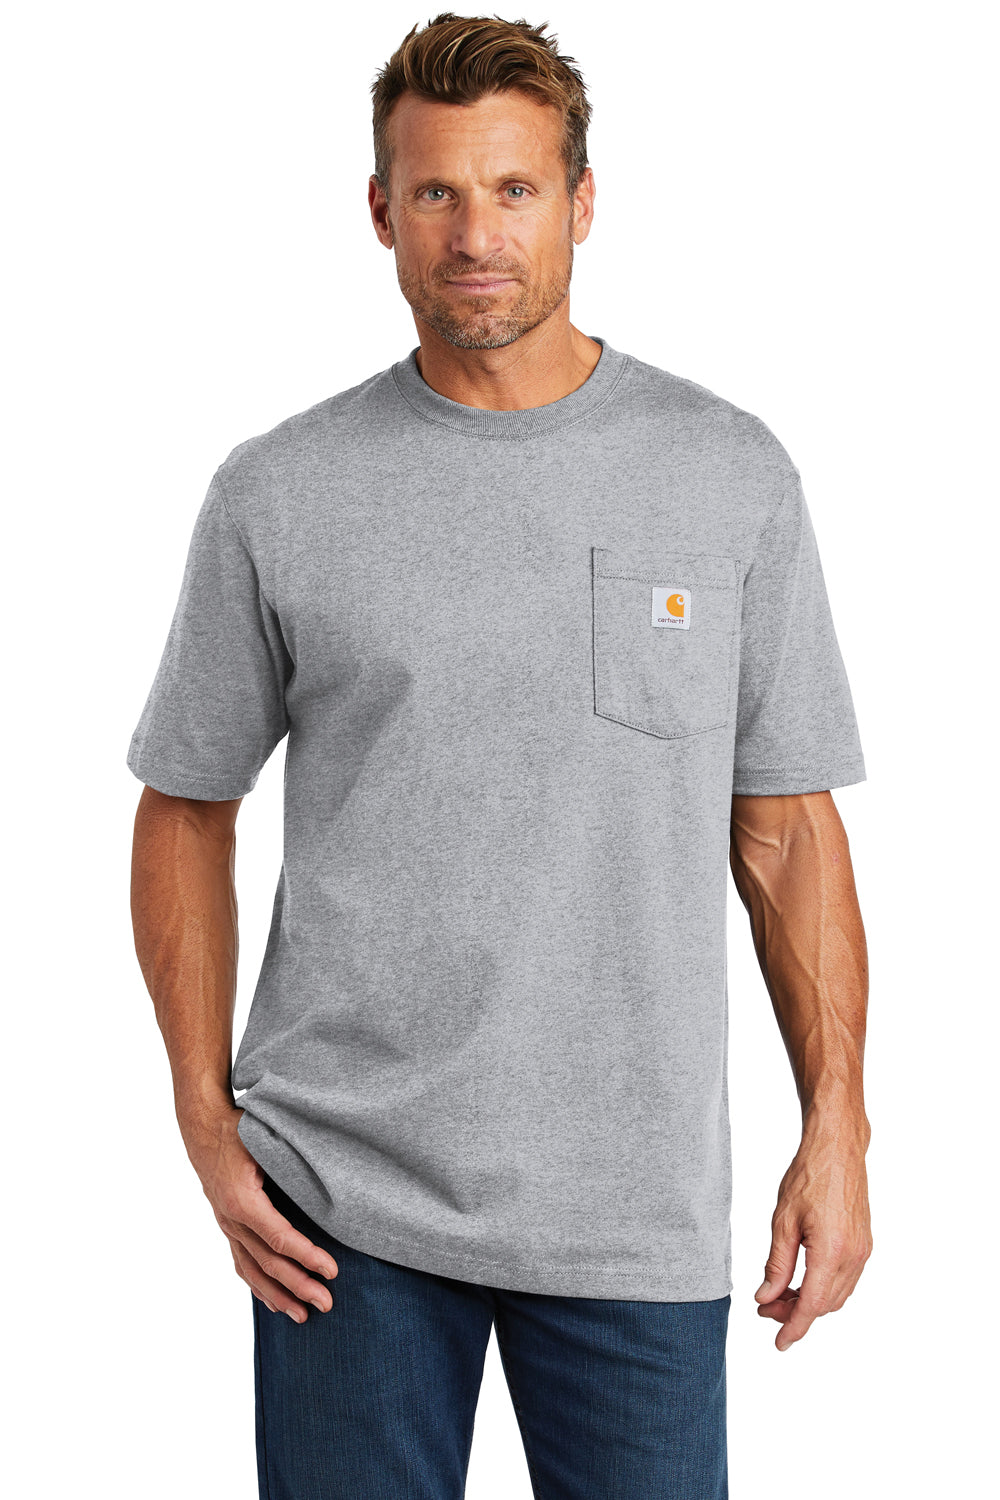 Carhartt Mens Workwear Short Sleeve Crewneck T-Shirt W/ Pocket Heather Grey, Carhartt Ctk87